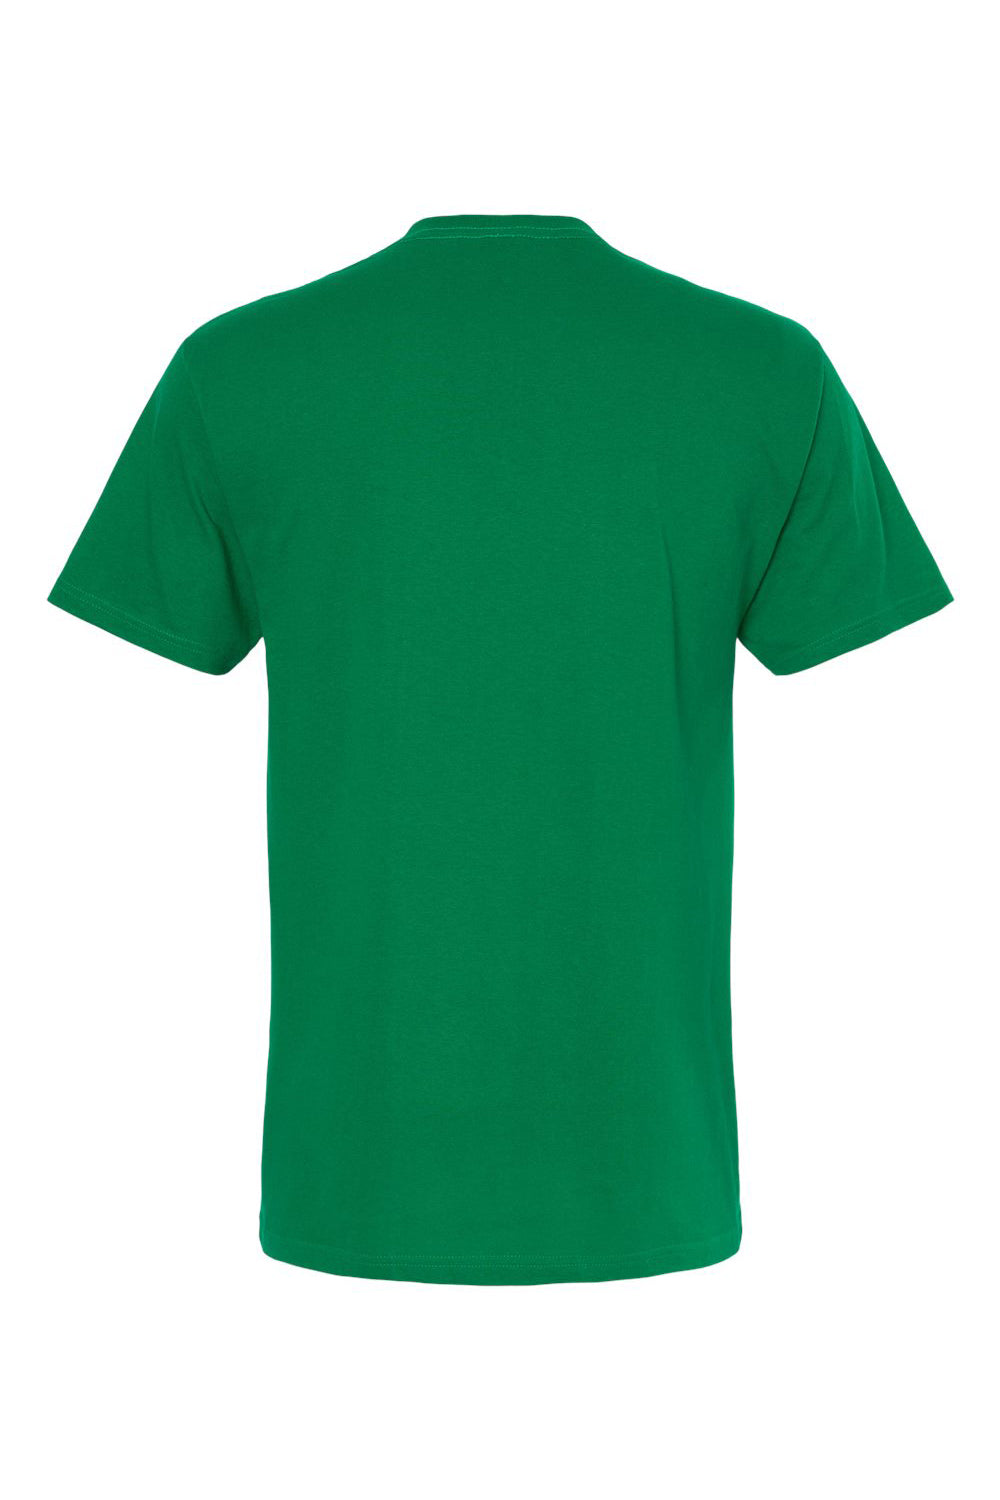 M&O 4800 Mens Gold Soft Touch Short Sleeve Crewneck T-Shirt Fine Kelly Green Flat Back